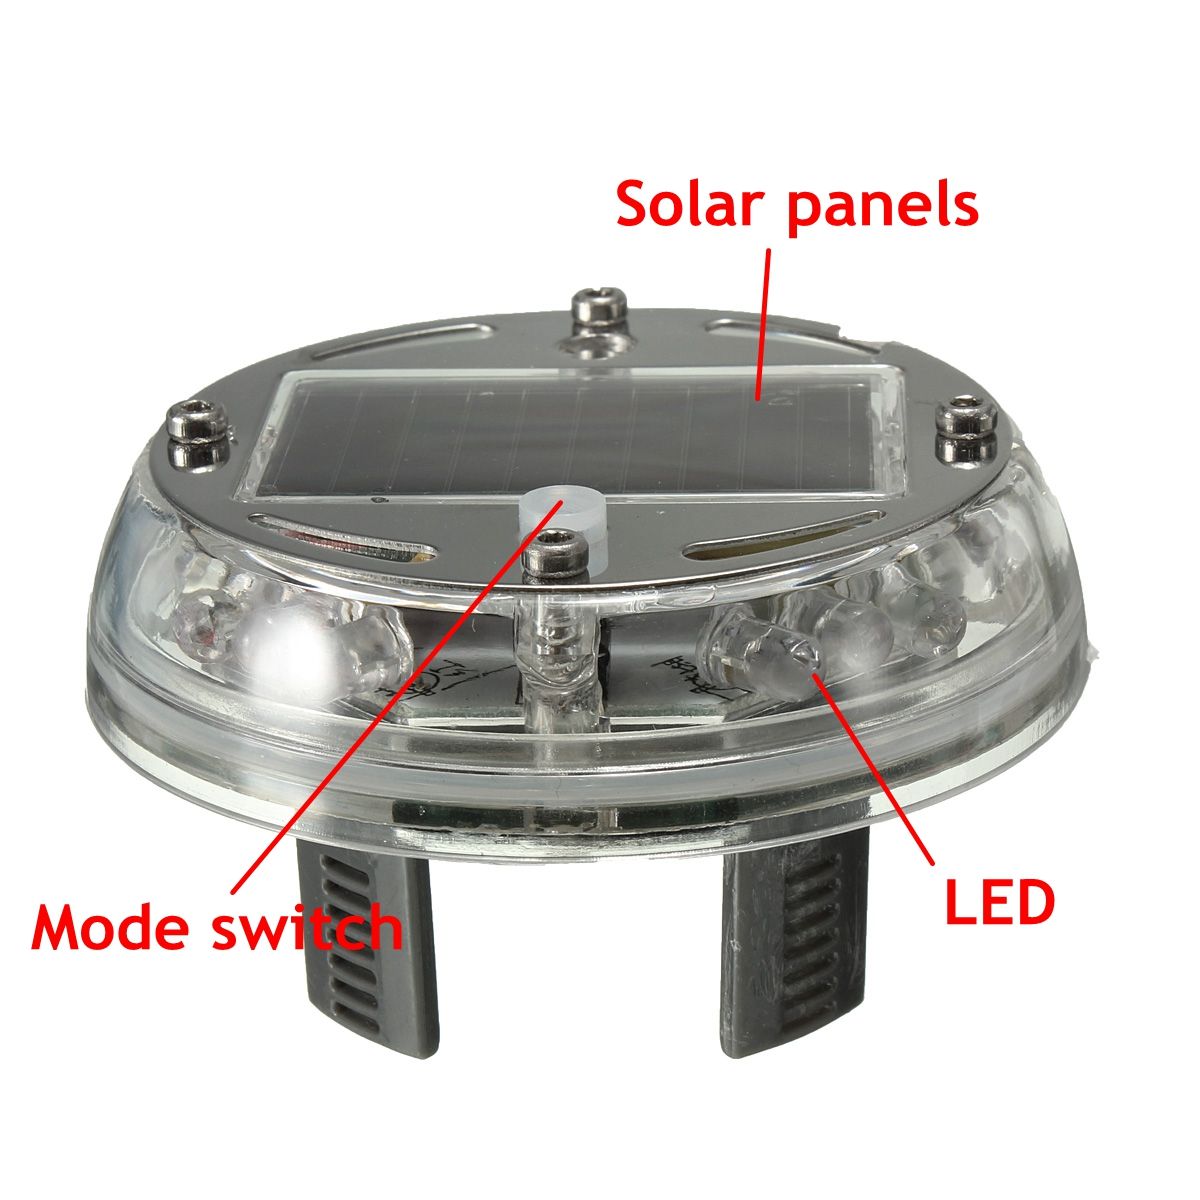 Solar-Energy-LED-Car-Wheel-Tire-Rim-Flash-Light-Decoration-Lamp-4-Flashing-Modes-1003720